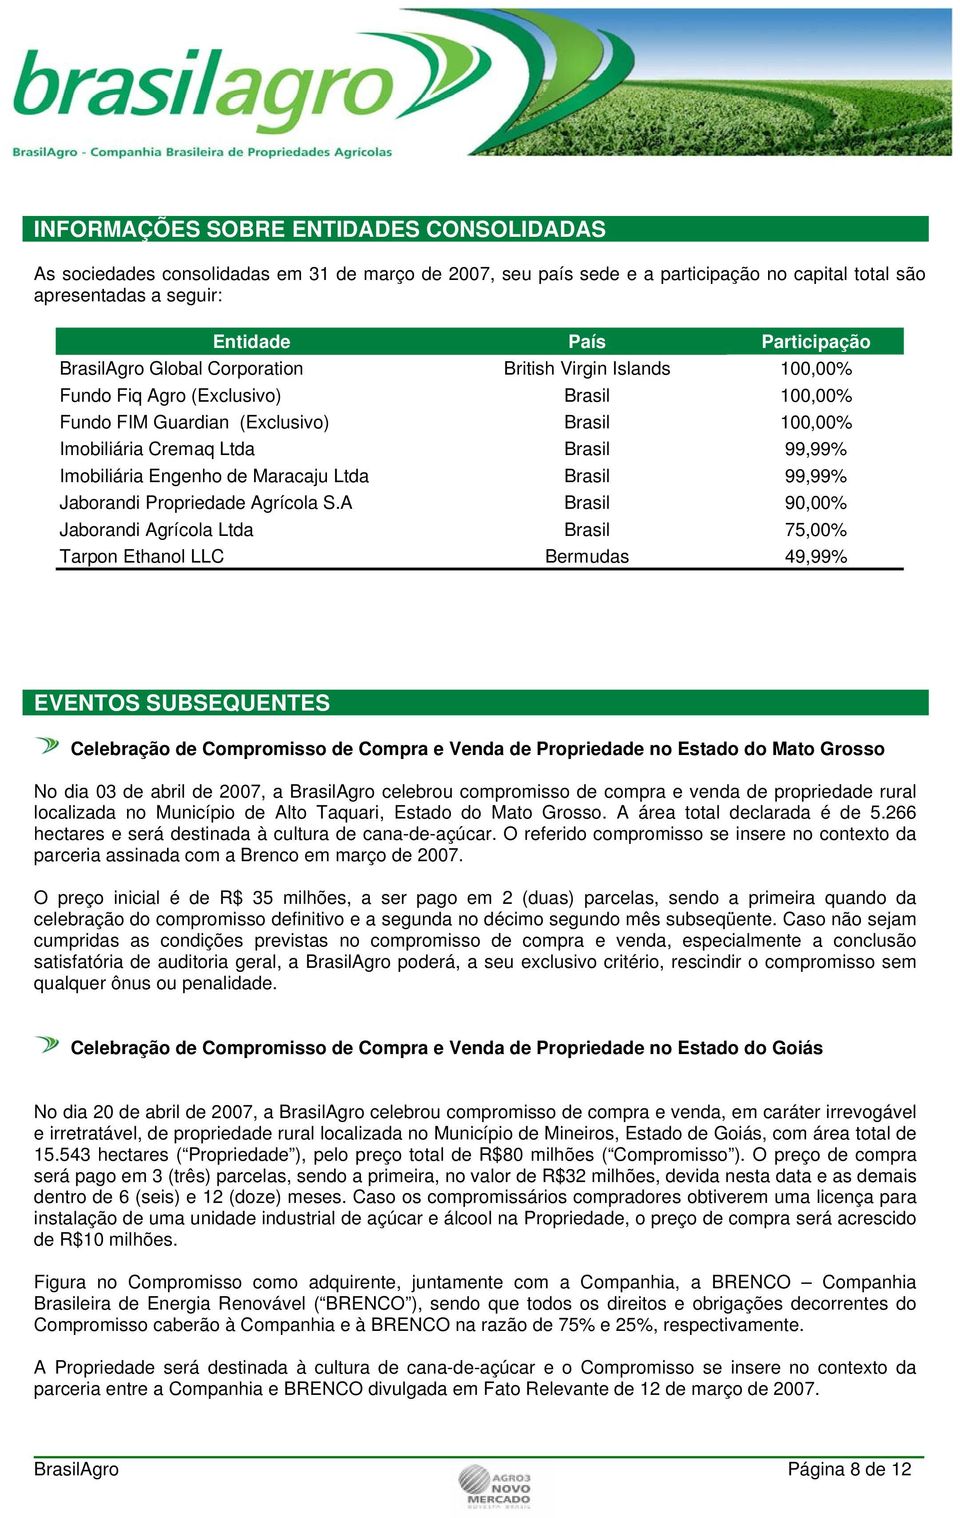 Engenho de Maracaju Ltda Brasil 99,99% Jaborandi Propriedade Agrícola S.